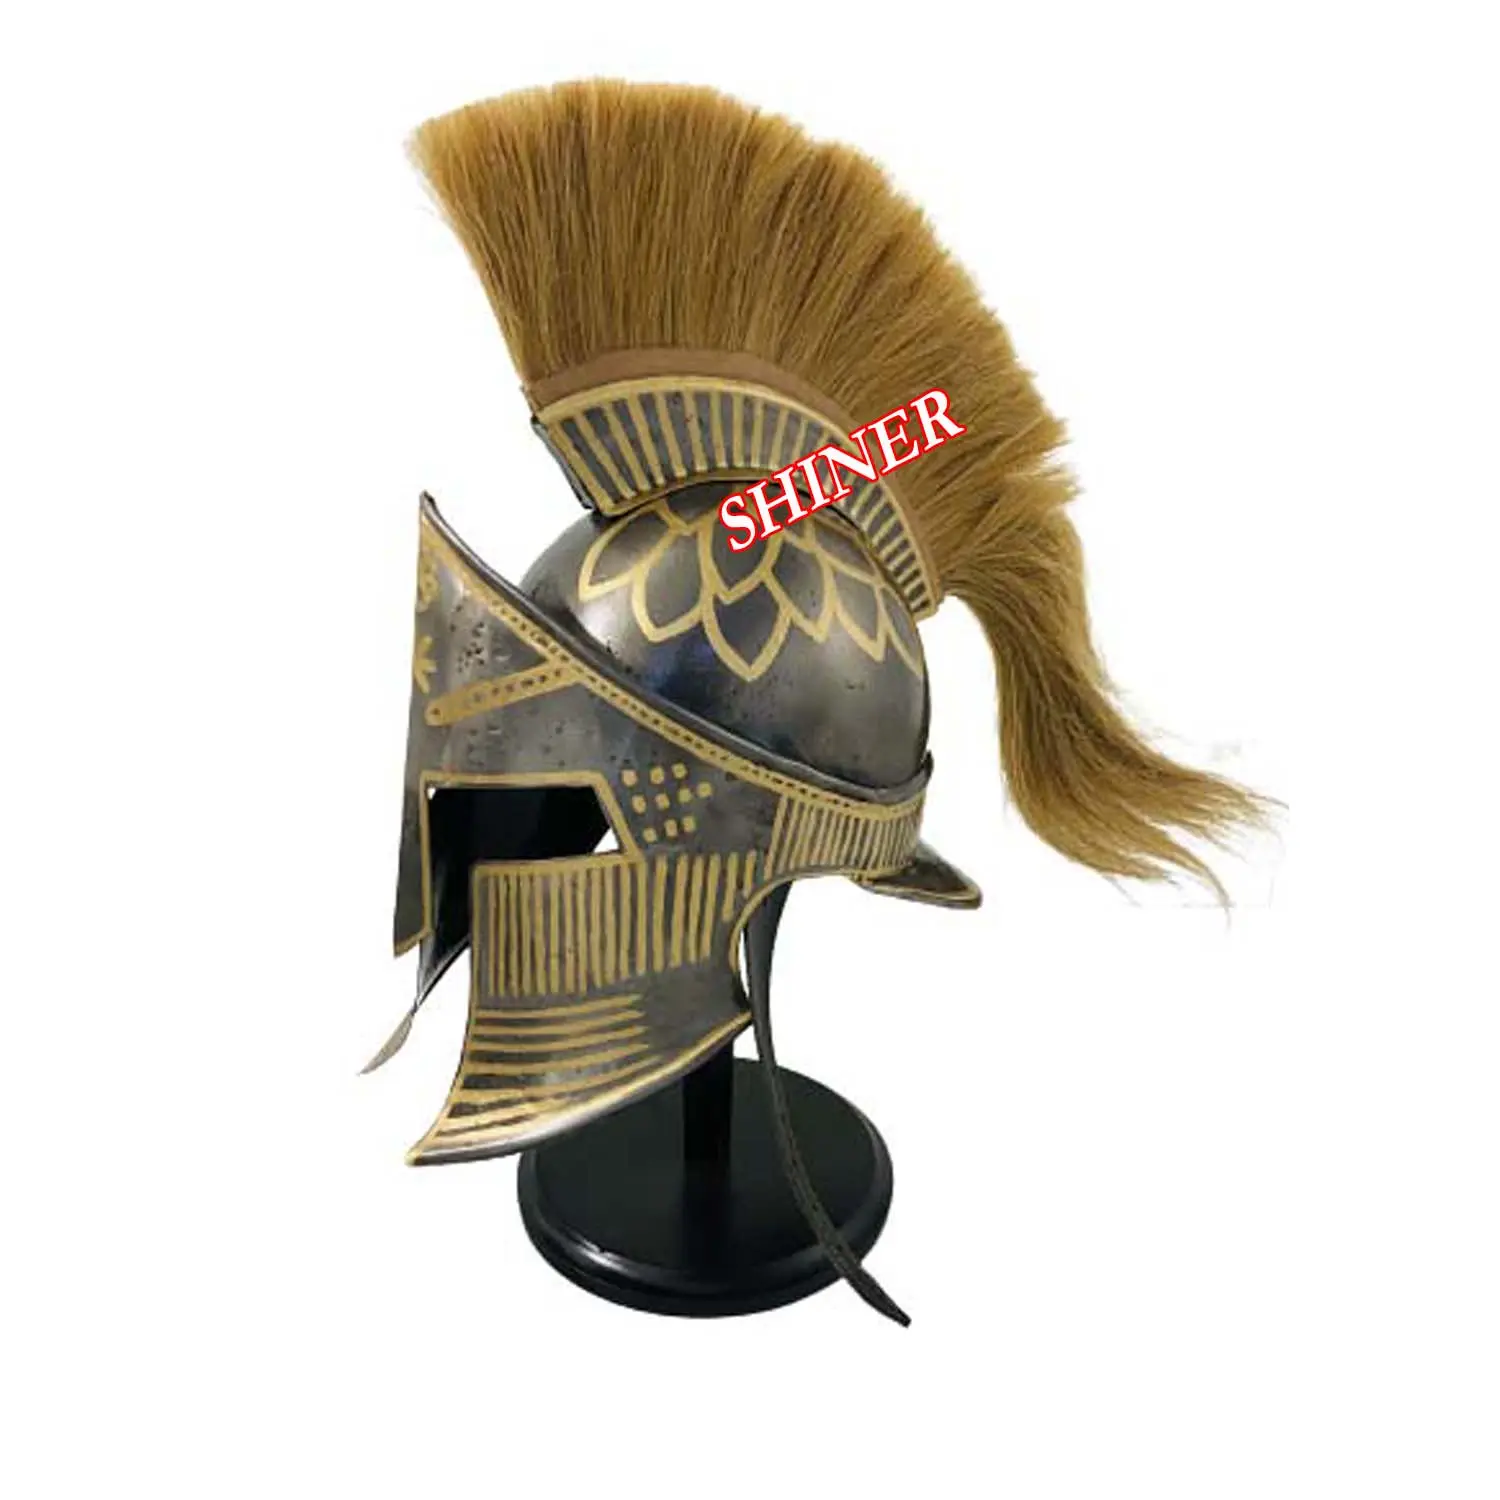 Armor Corinthian King 300 Spartan Helmet Cosplay Greek Armor Prop Wearable Helmet Wooden Display Stand Natural Plume for Men Hel